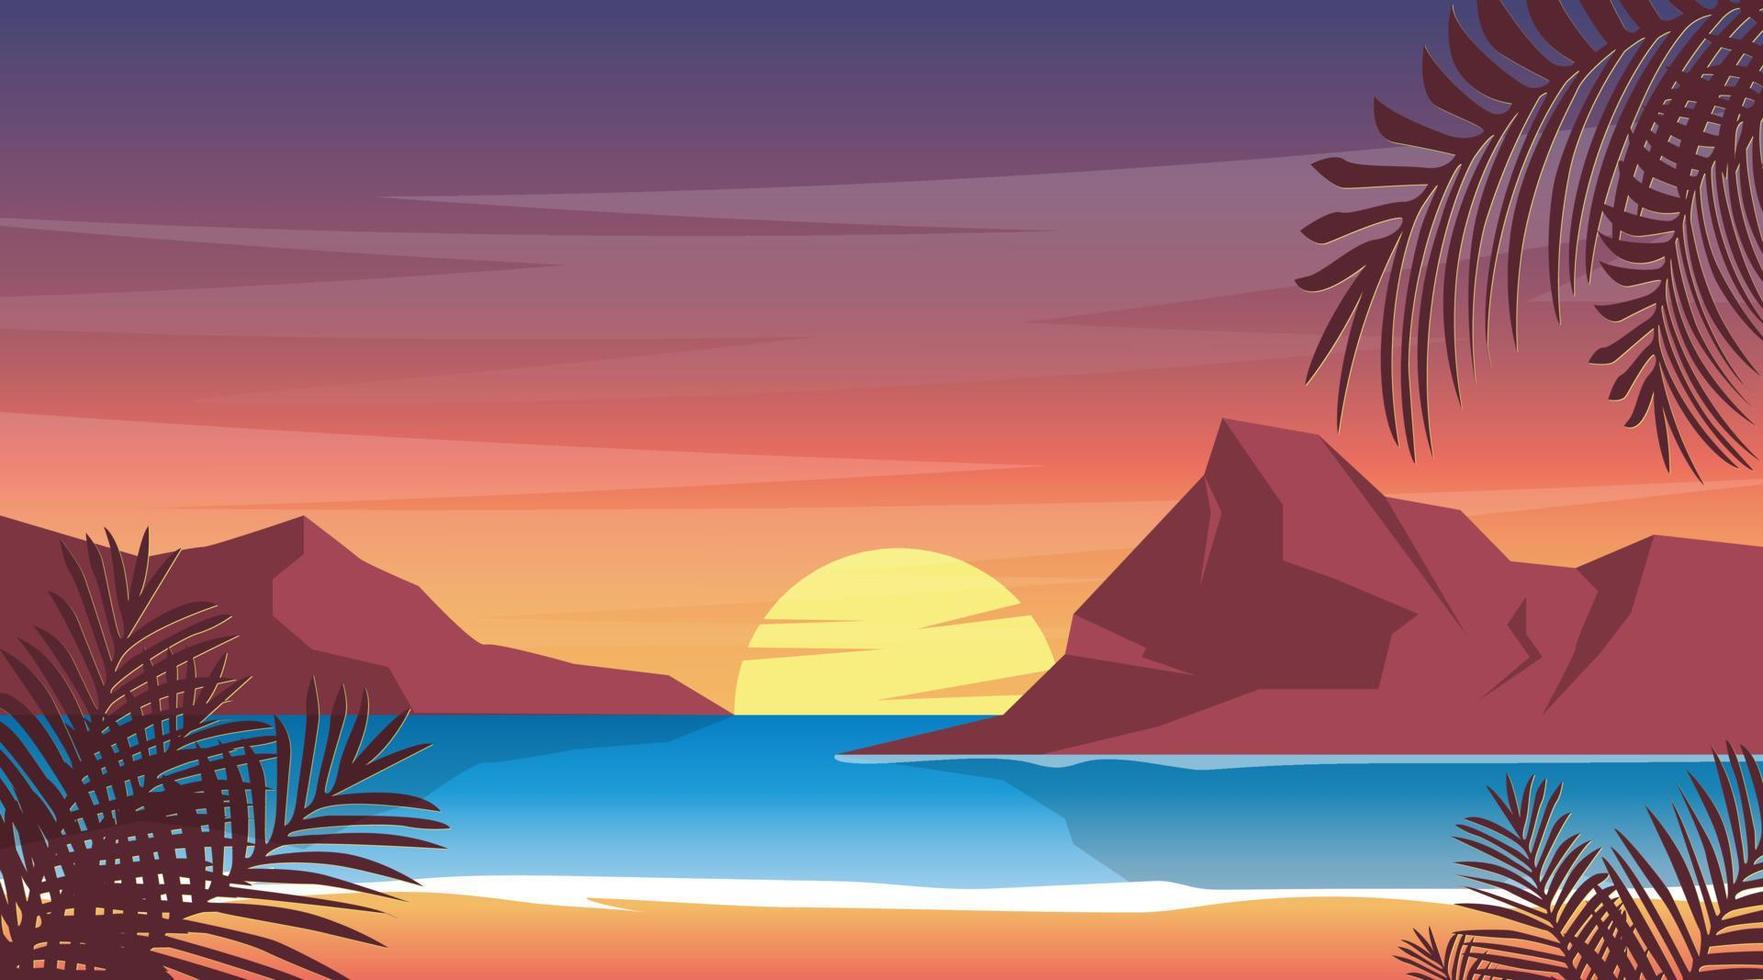 Sunset at beach illustration, nature summer wallpaper vector